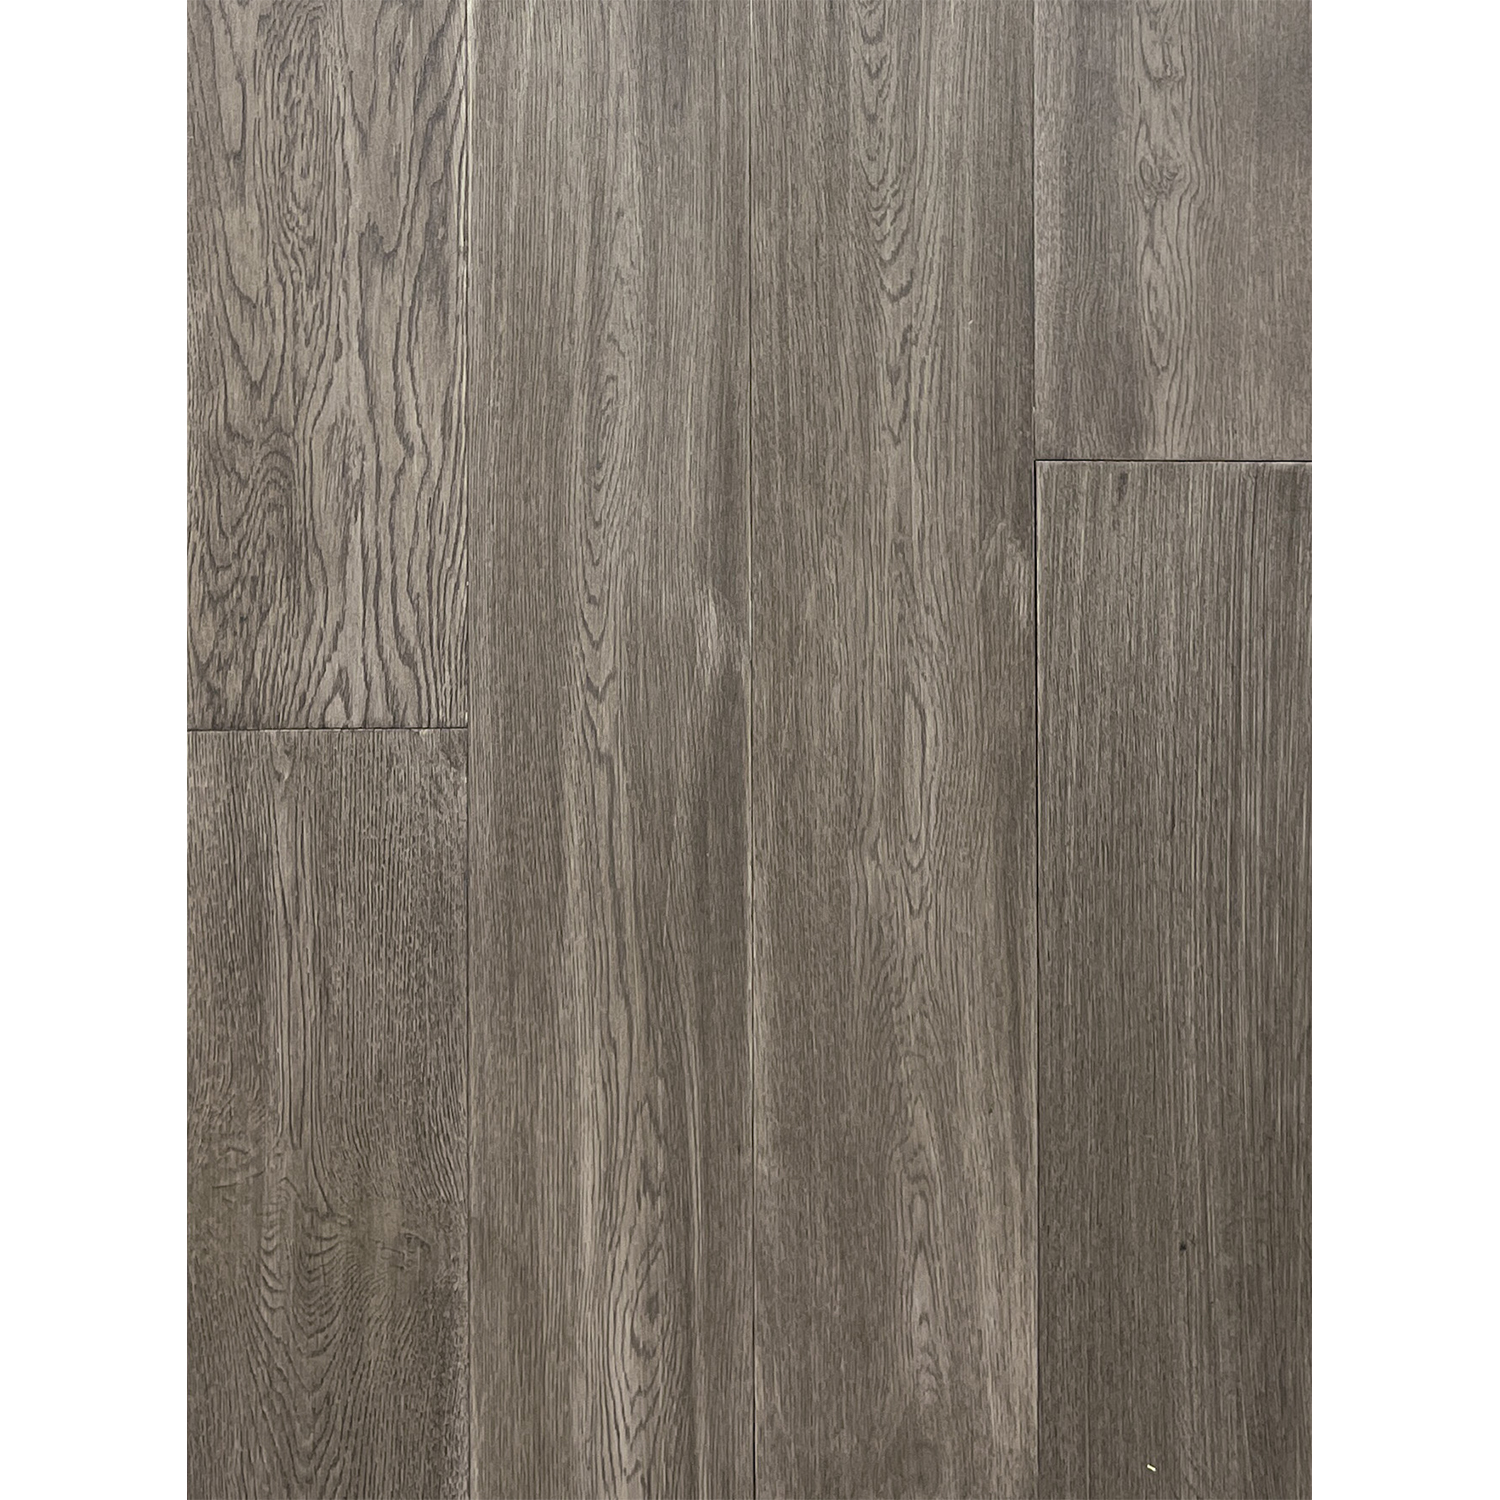 Floorest - 6 1/2 x 3/4 - Harbour Grey - 1998 - B014 23.11 SF / Box Engineered Hardwood - New